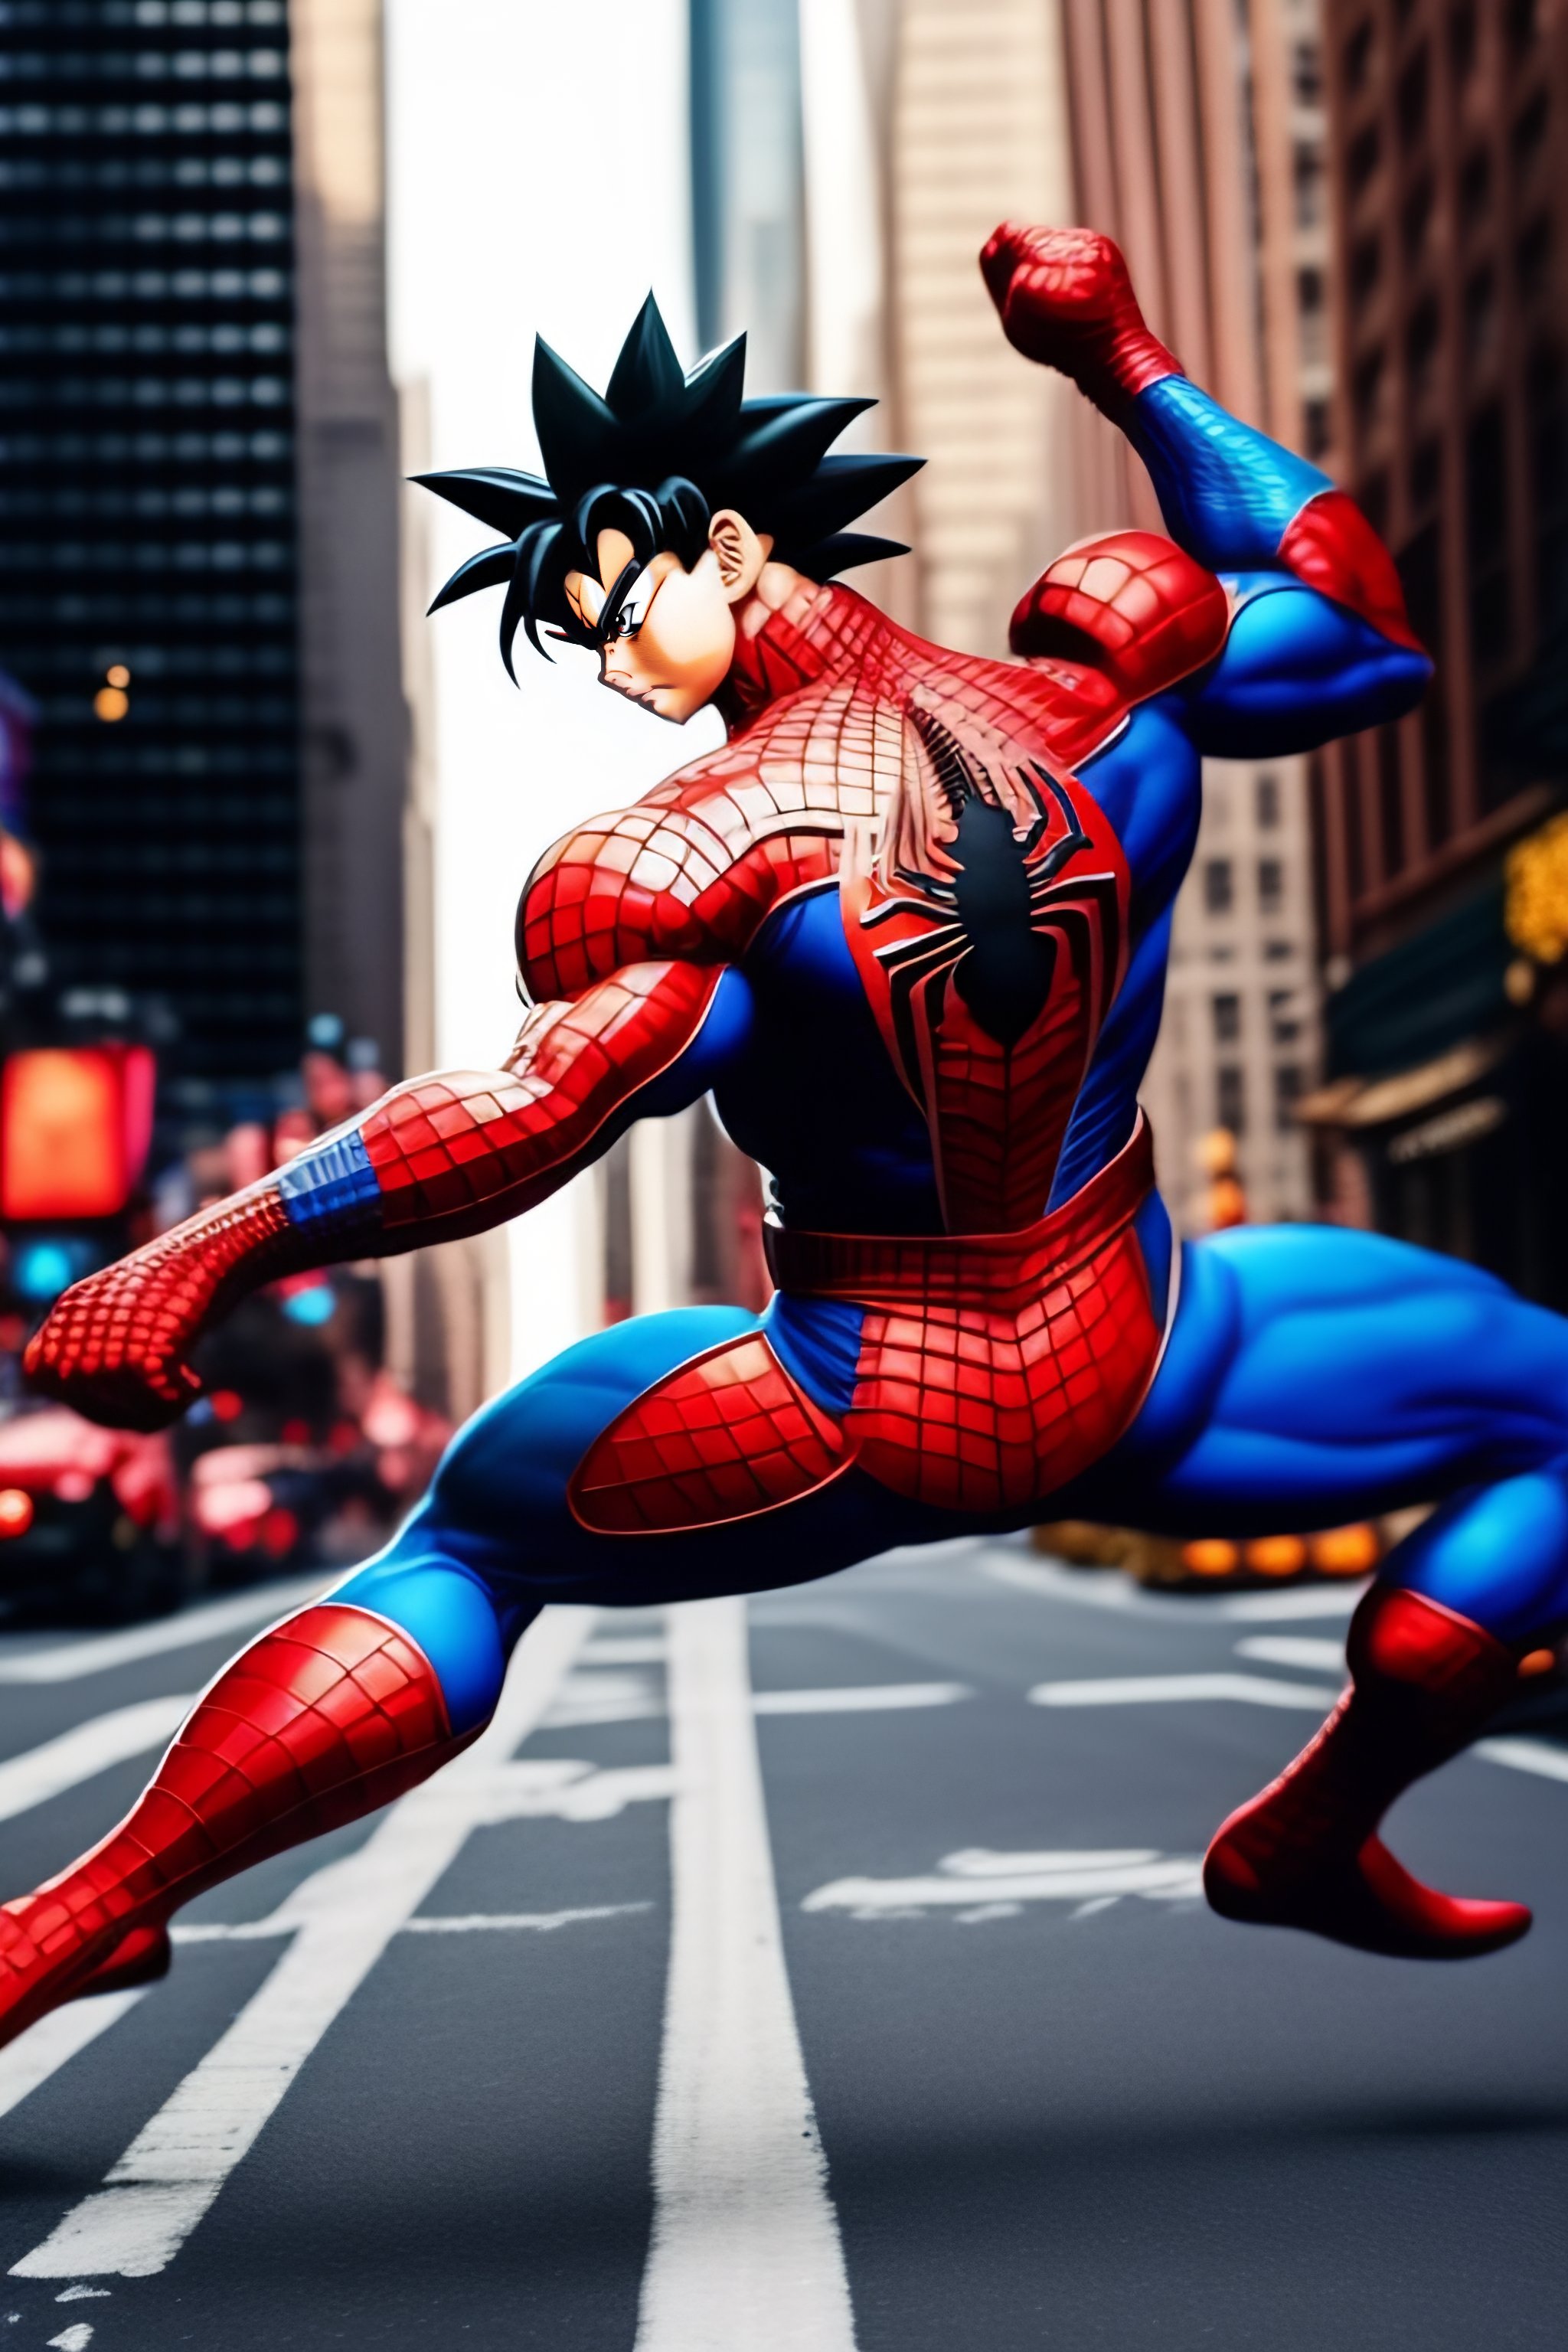 Lexica - Goku fights Spiderman in new york